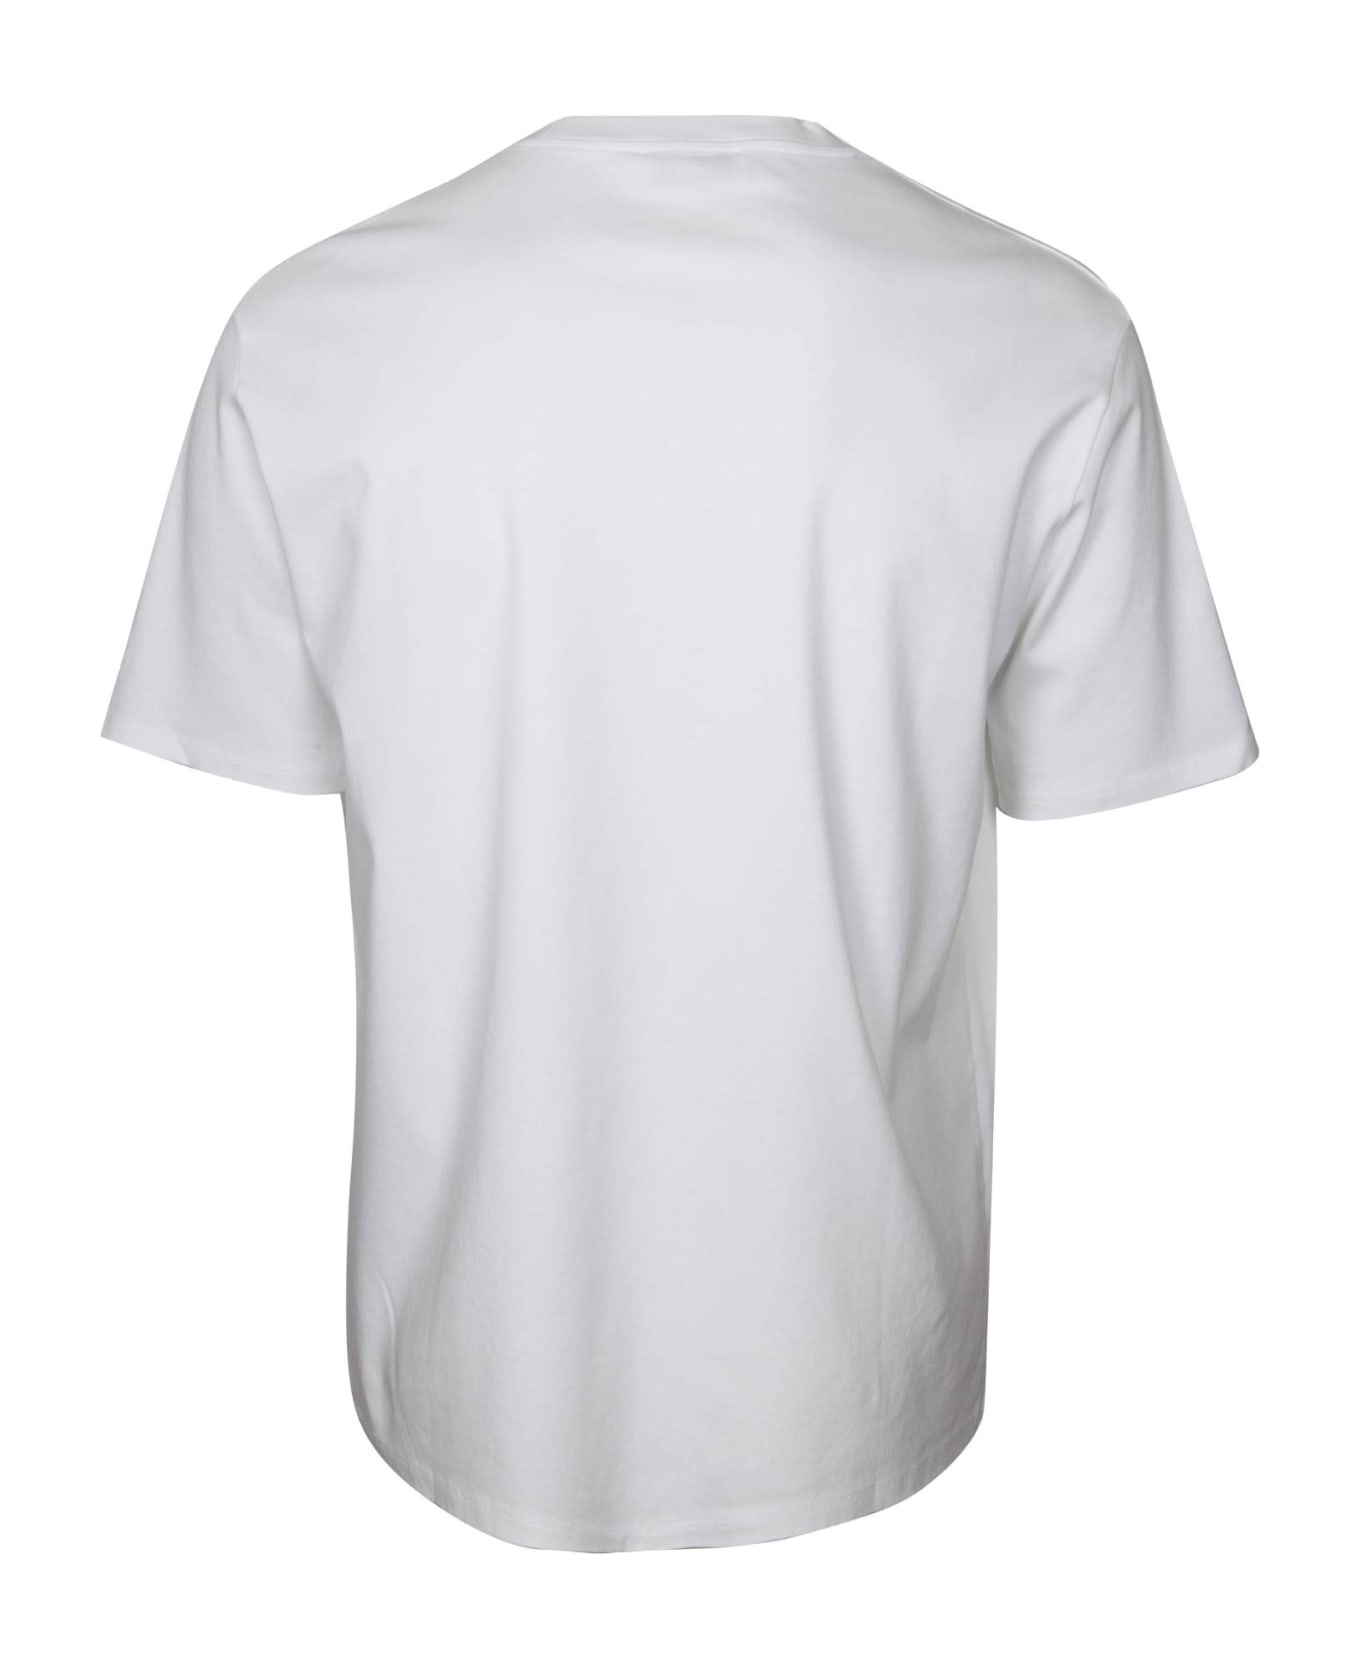 Lanvin Cotton T-shirt With Logo - Optic White